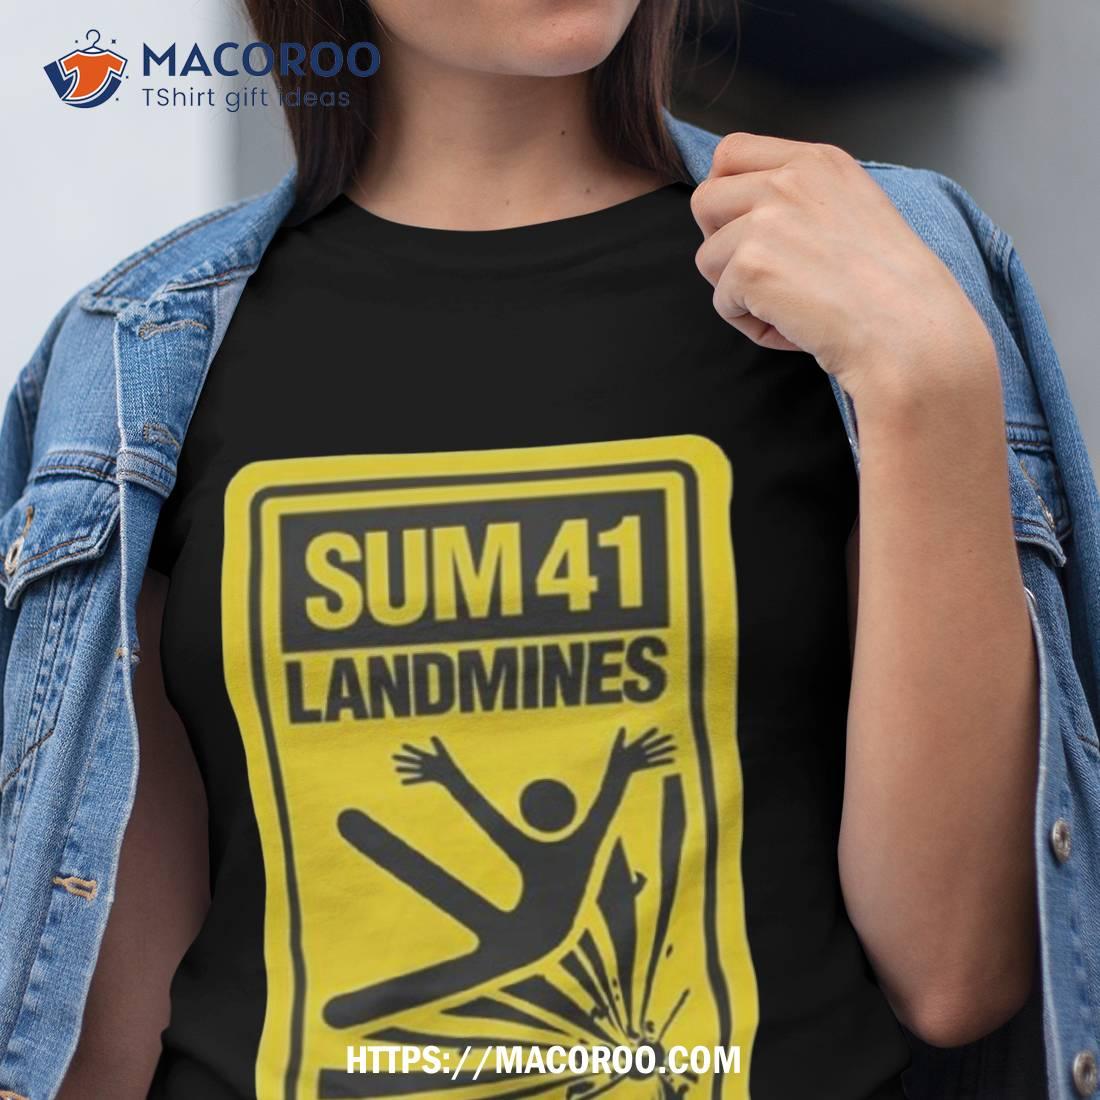 Landmines - song and lyrics by Sum 41